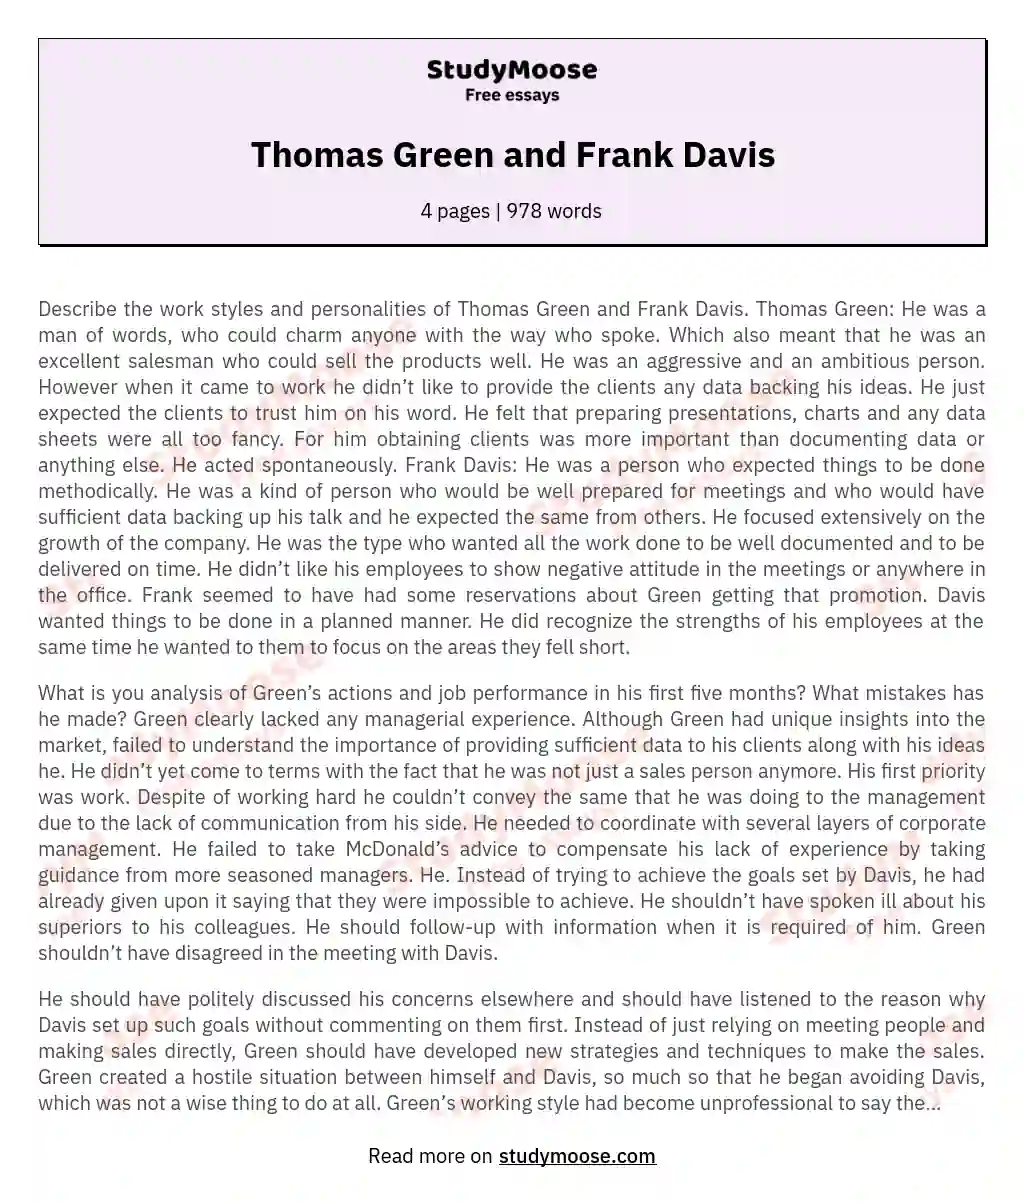 Thomas Green and Frank Davis